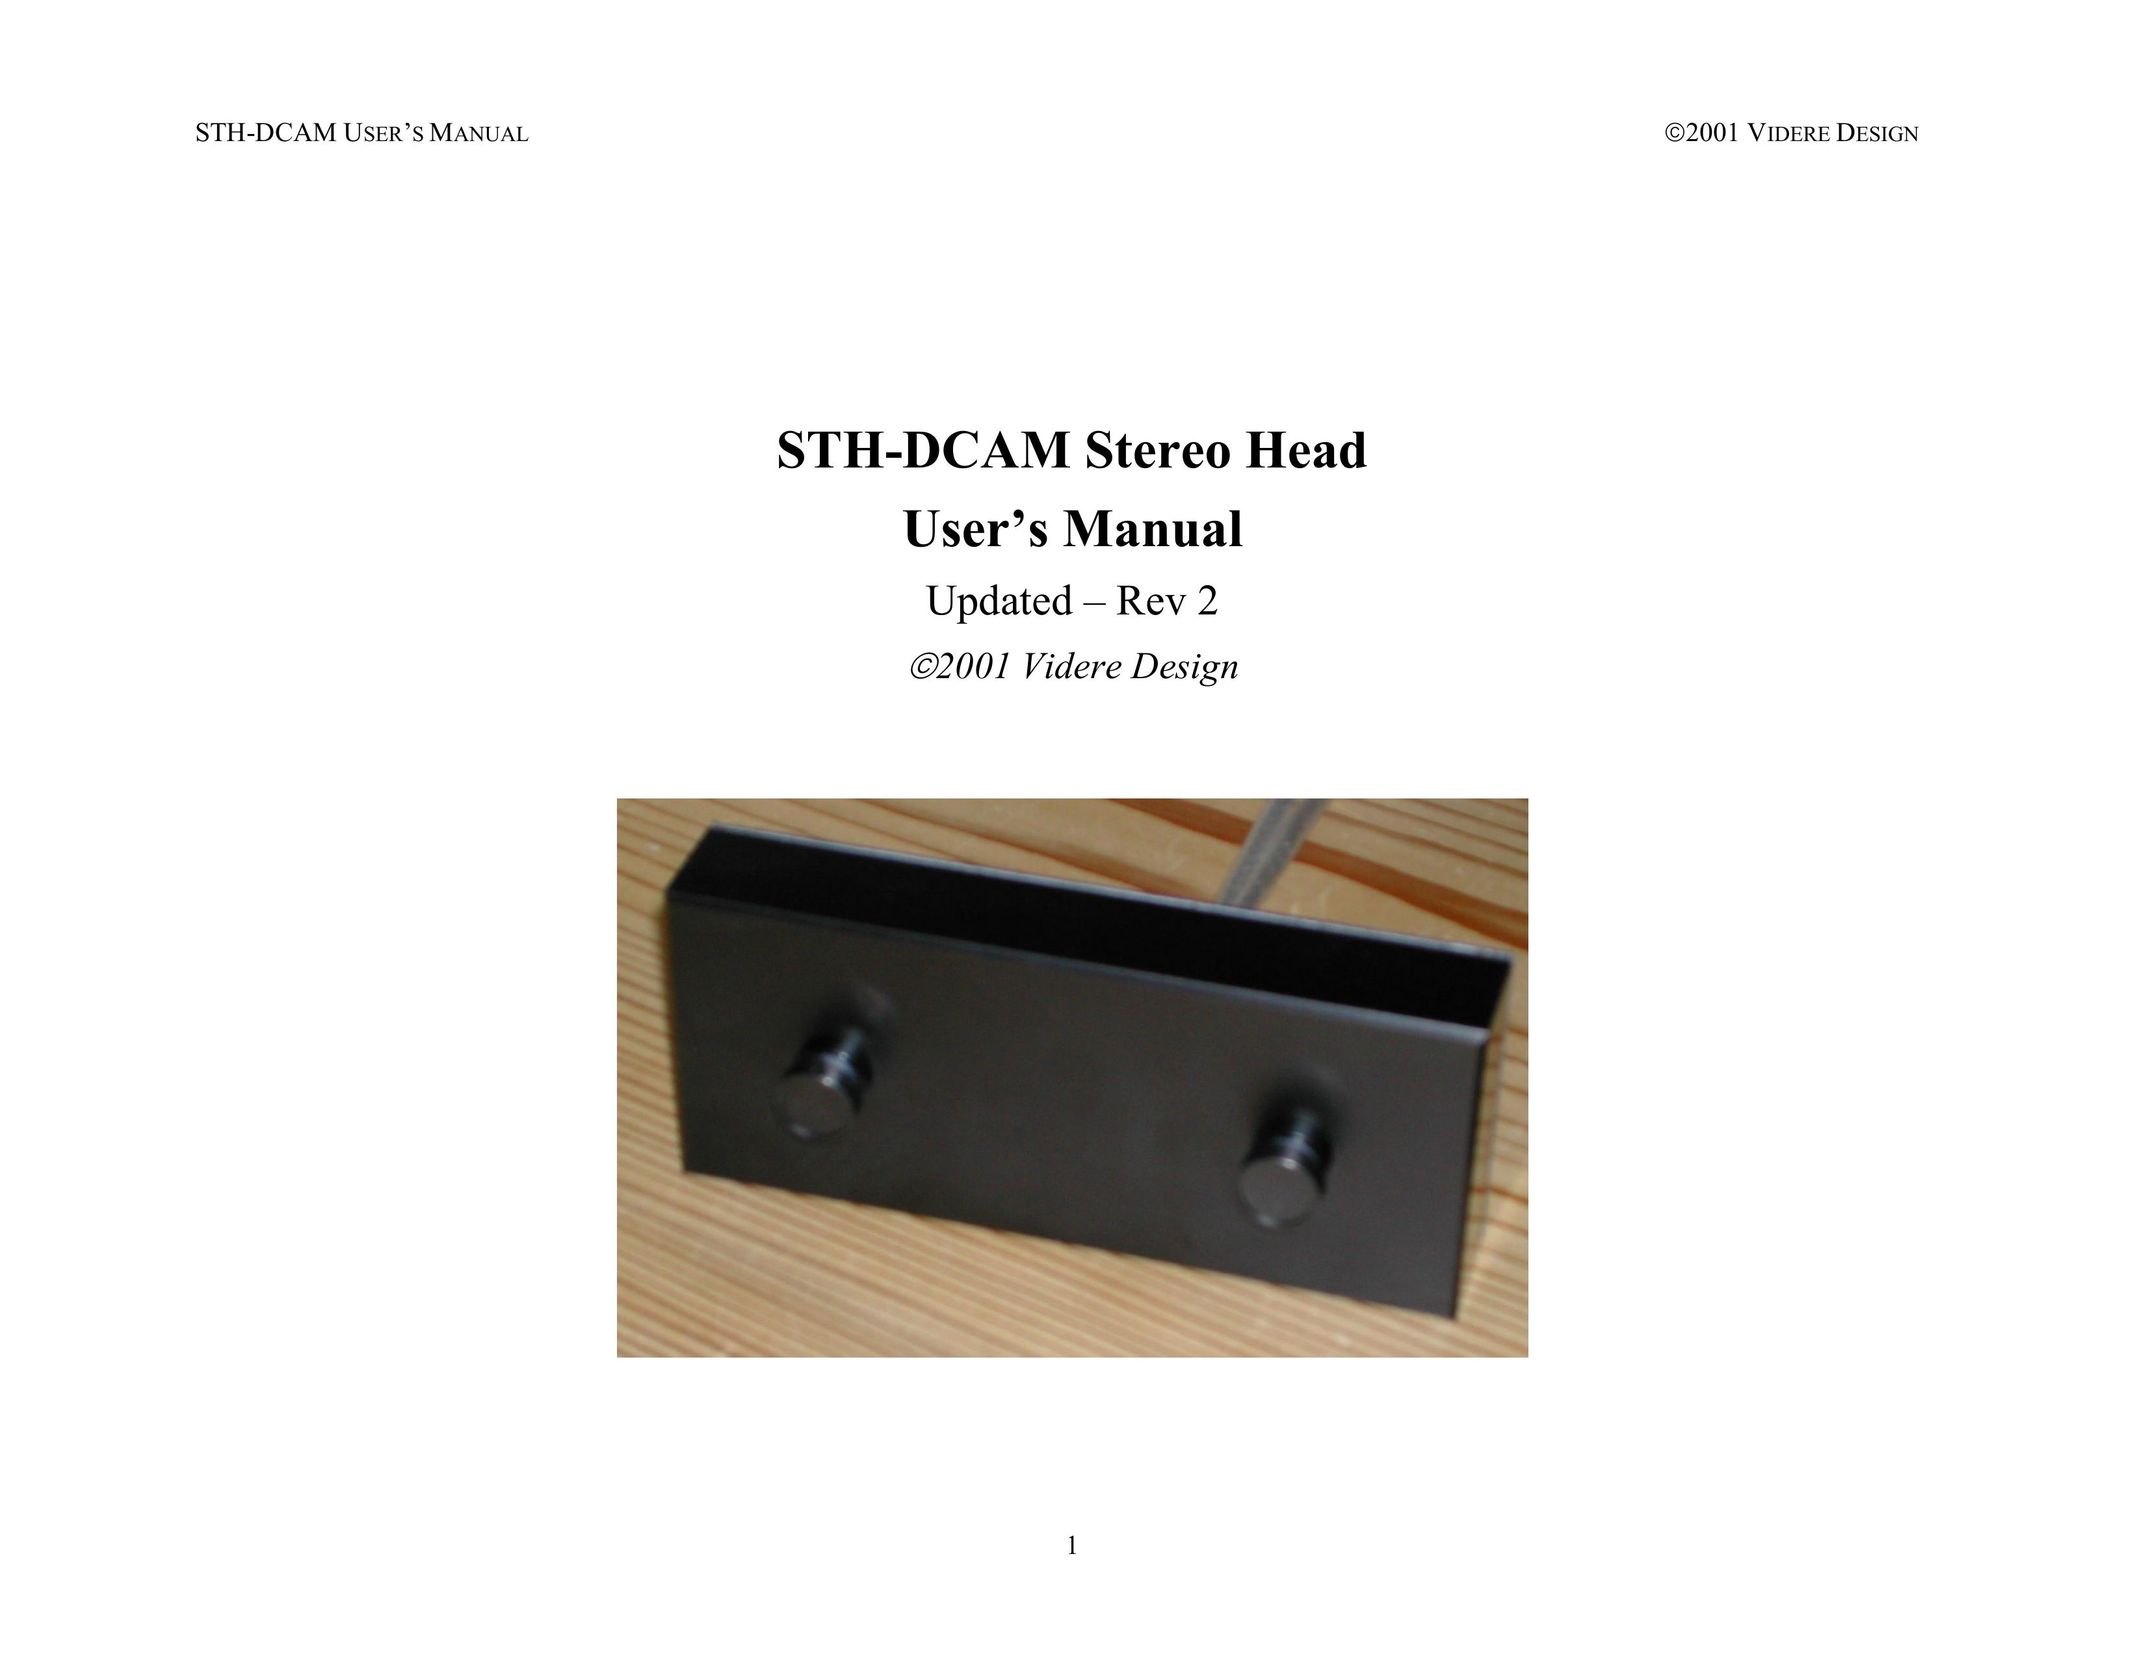 SOYO STH-DCAM Network Card User Manual